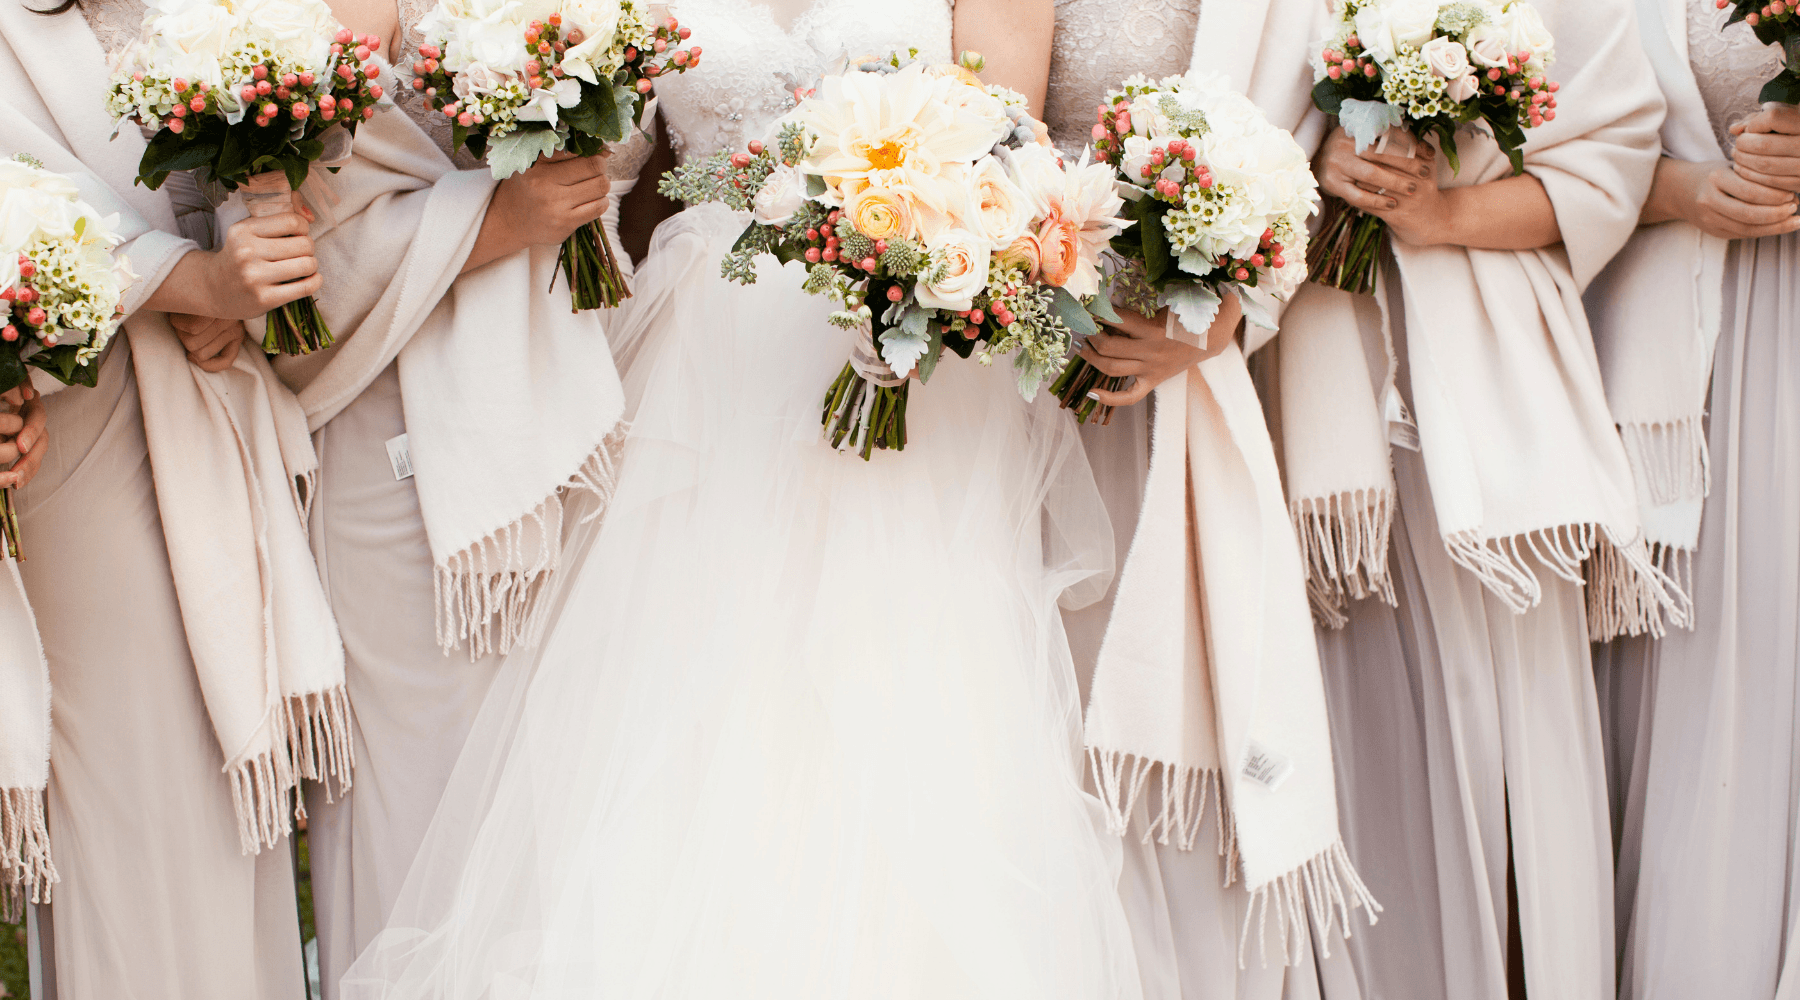 Choosing Your Bridesmaids' Dresses - Hoesh International Ltd